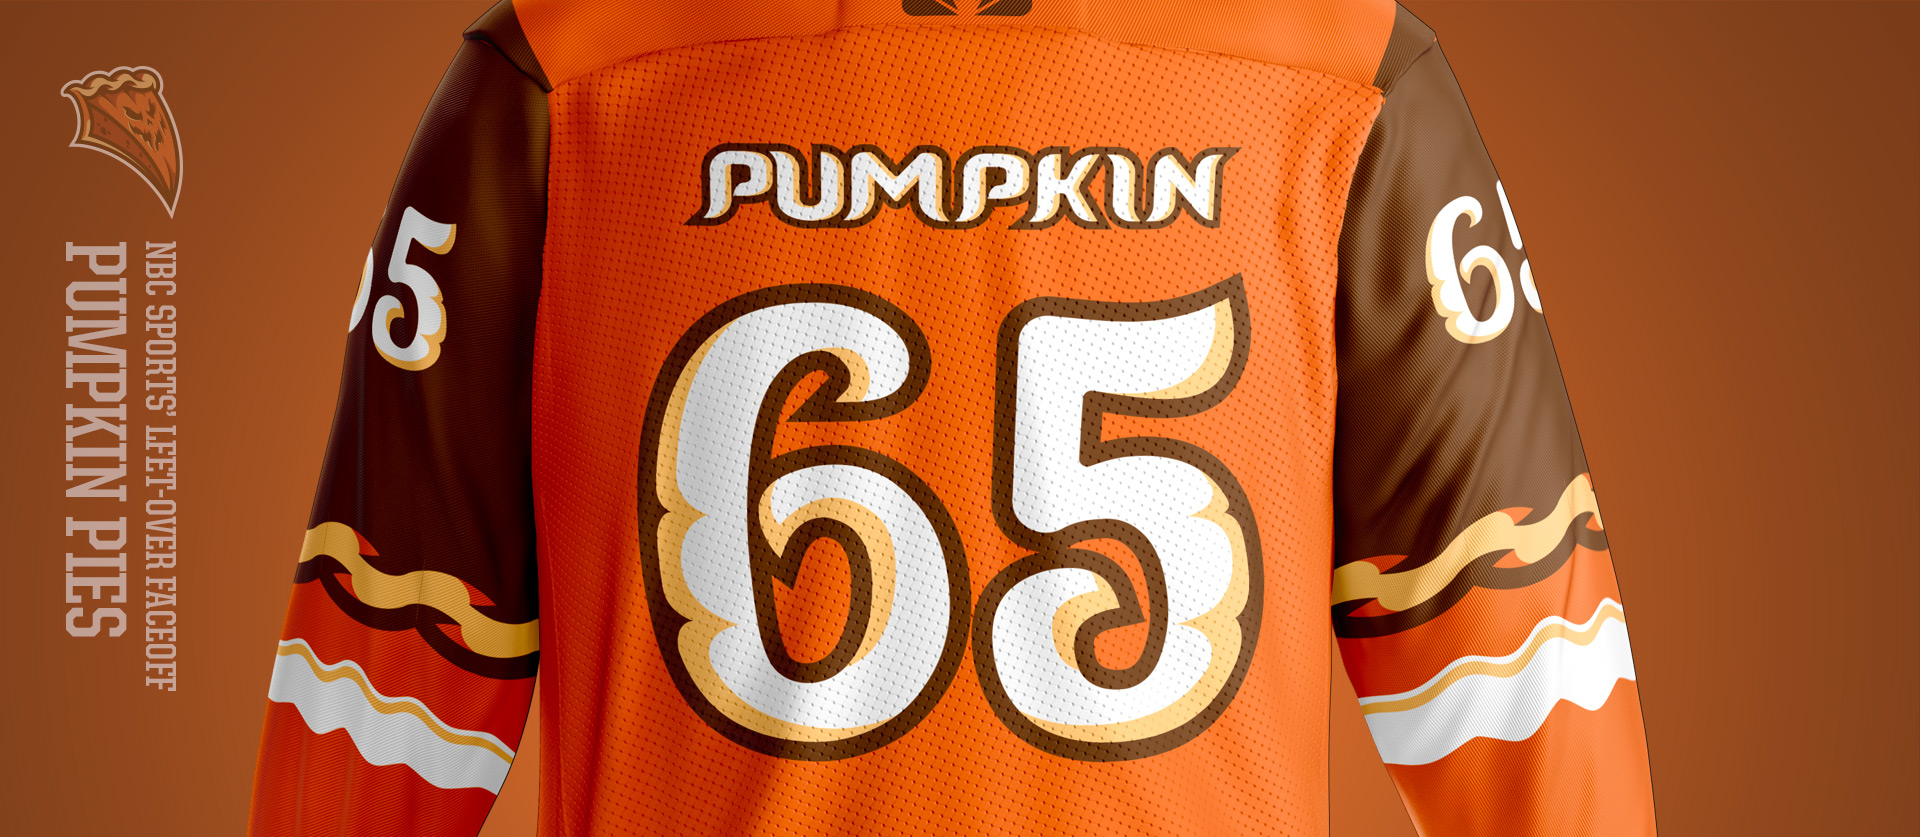 Pumpkin Pies Front - Football Uniform Design for NBC Sports Thanksgiving Second Feast Face-Off